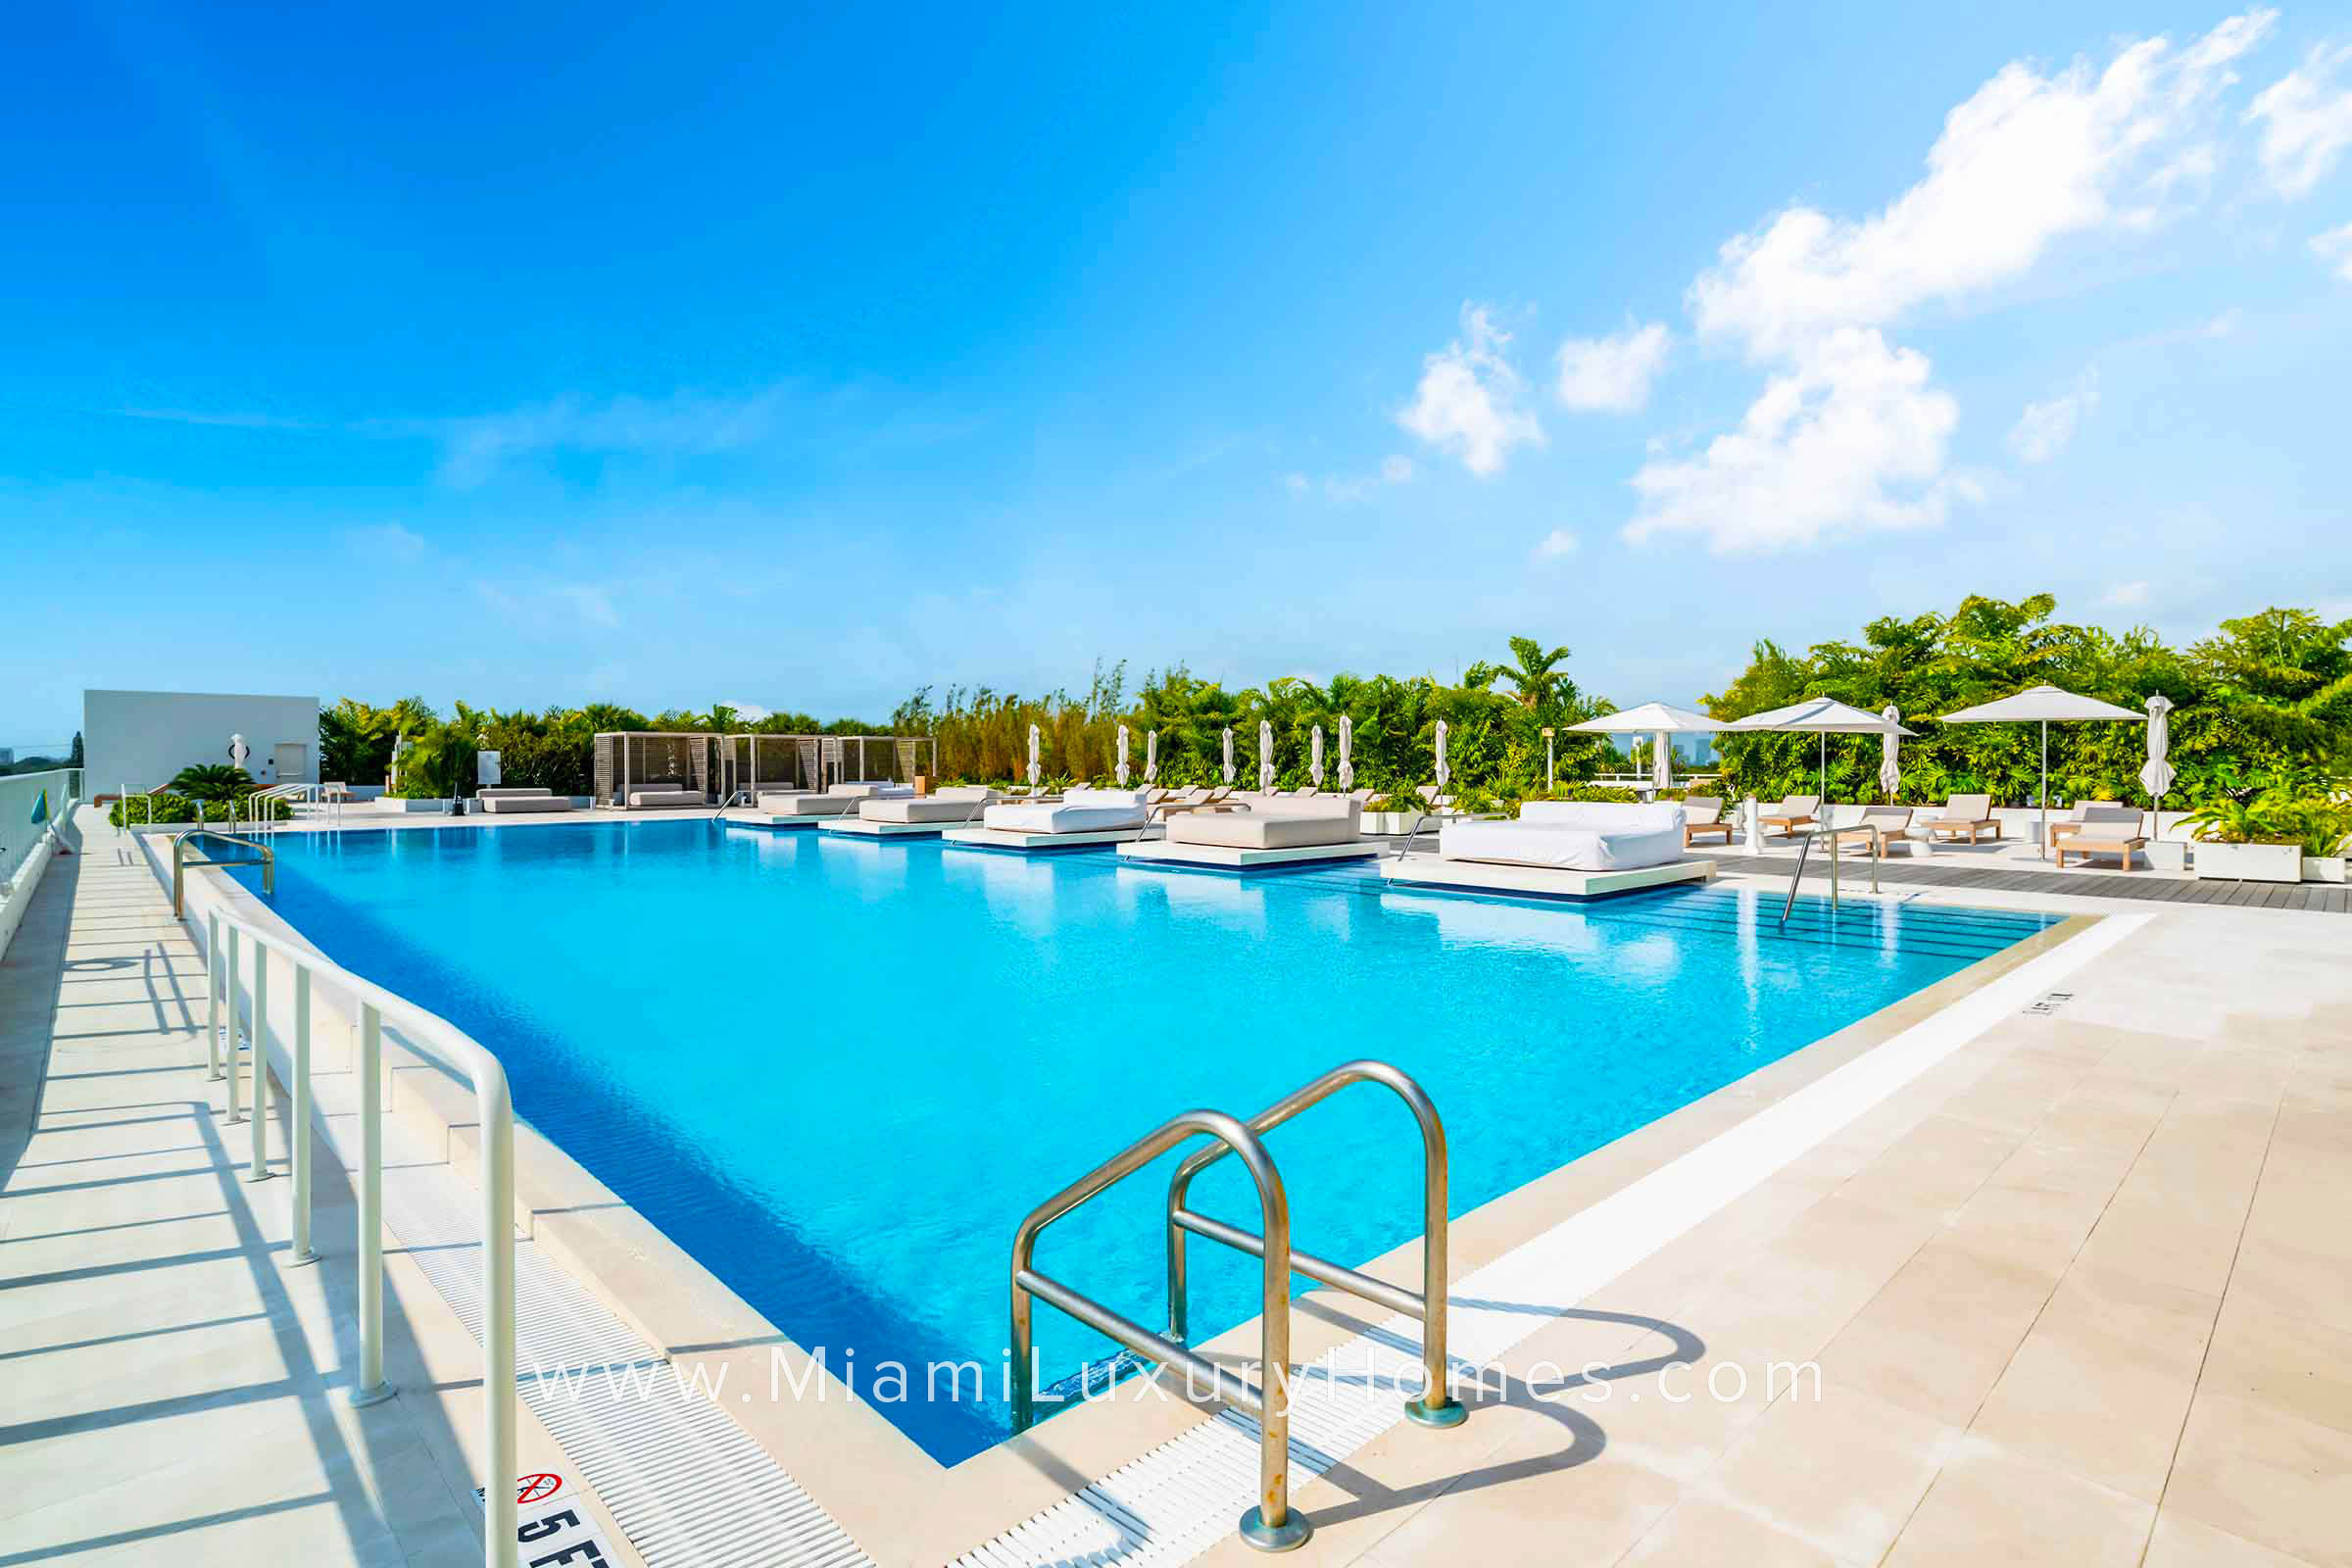 Ritz Carlton Residences Pool and Cabanas